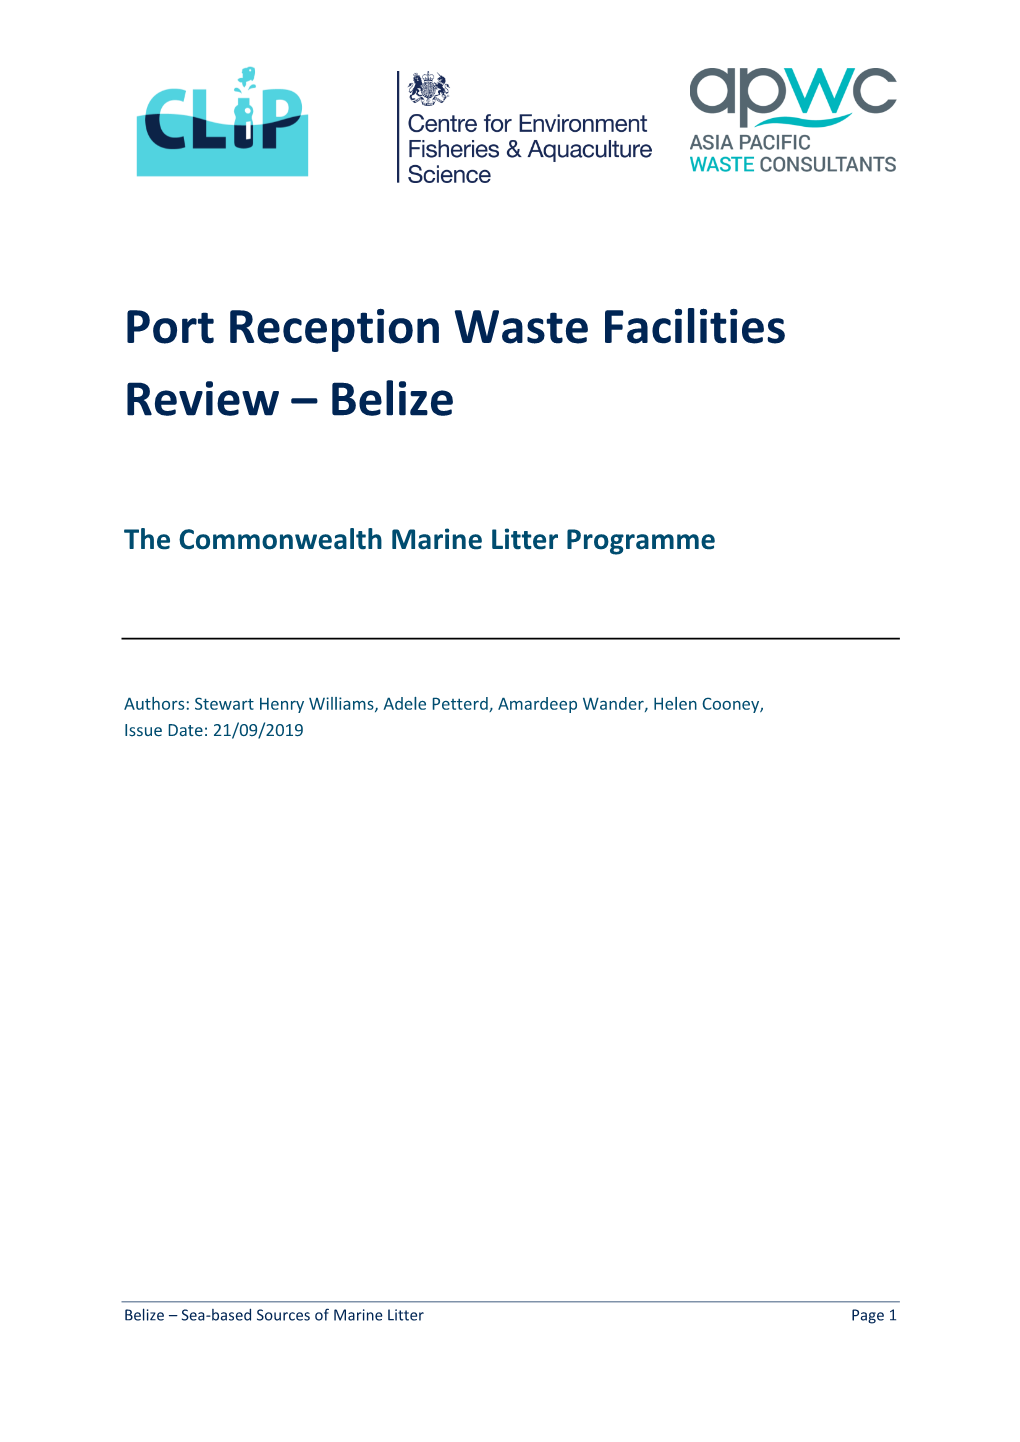 Port Reception Waste Facilities Review – Belize